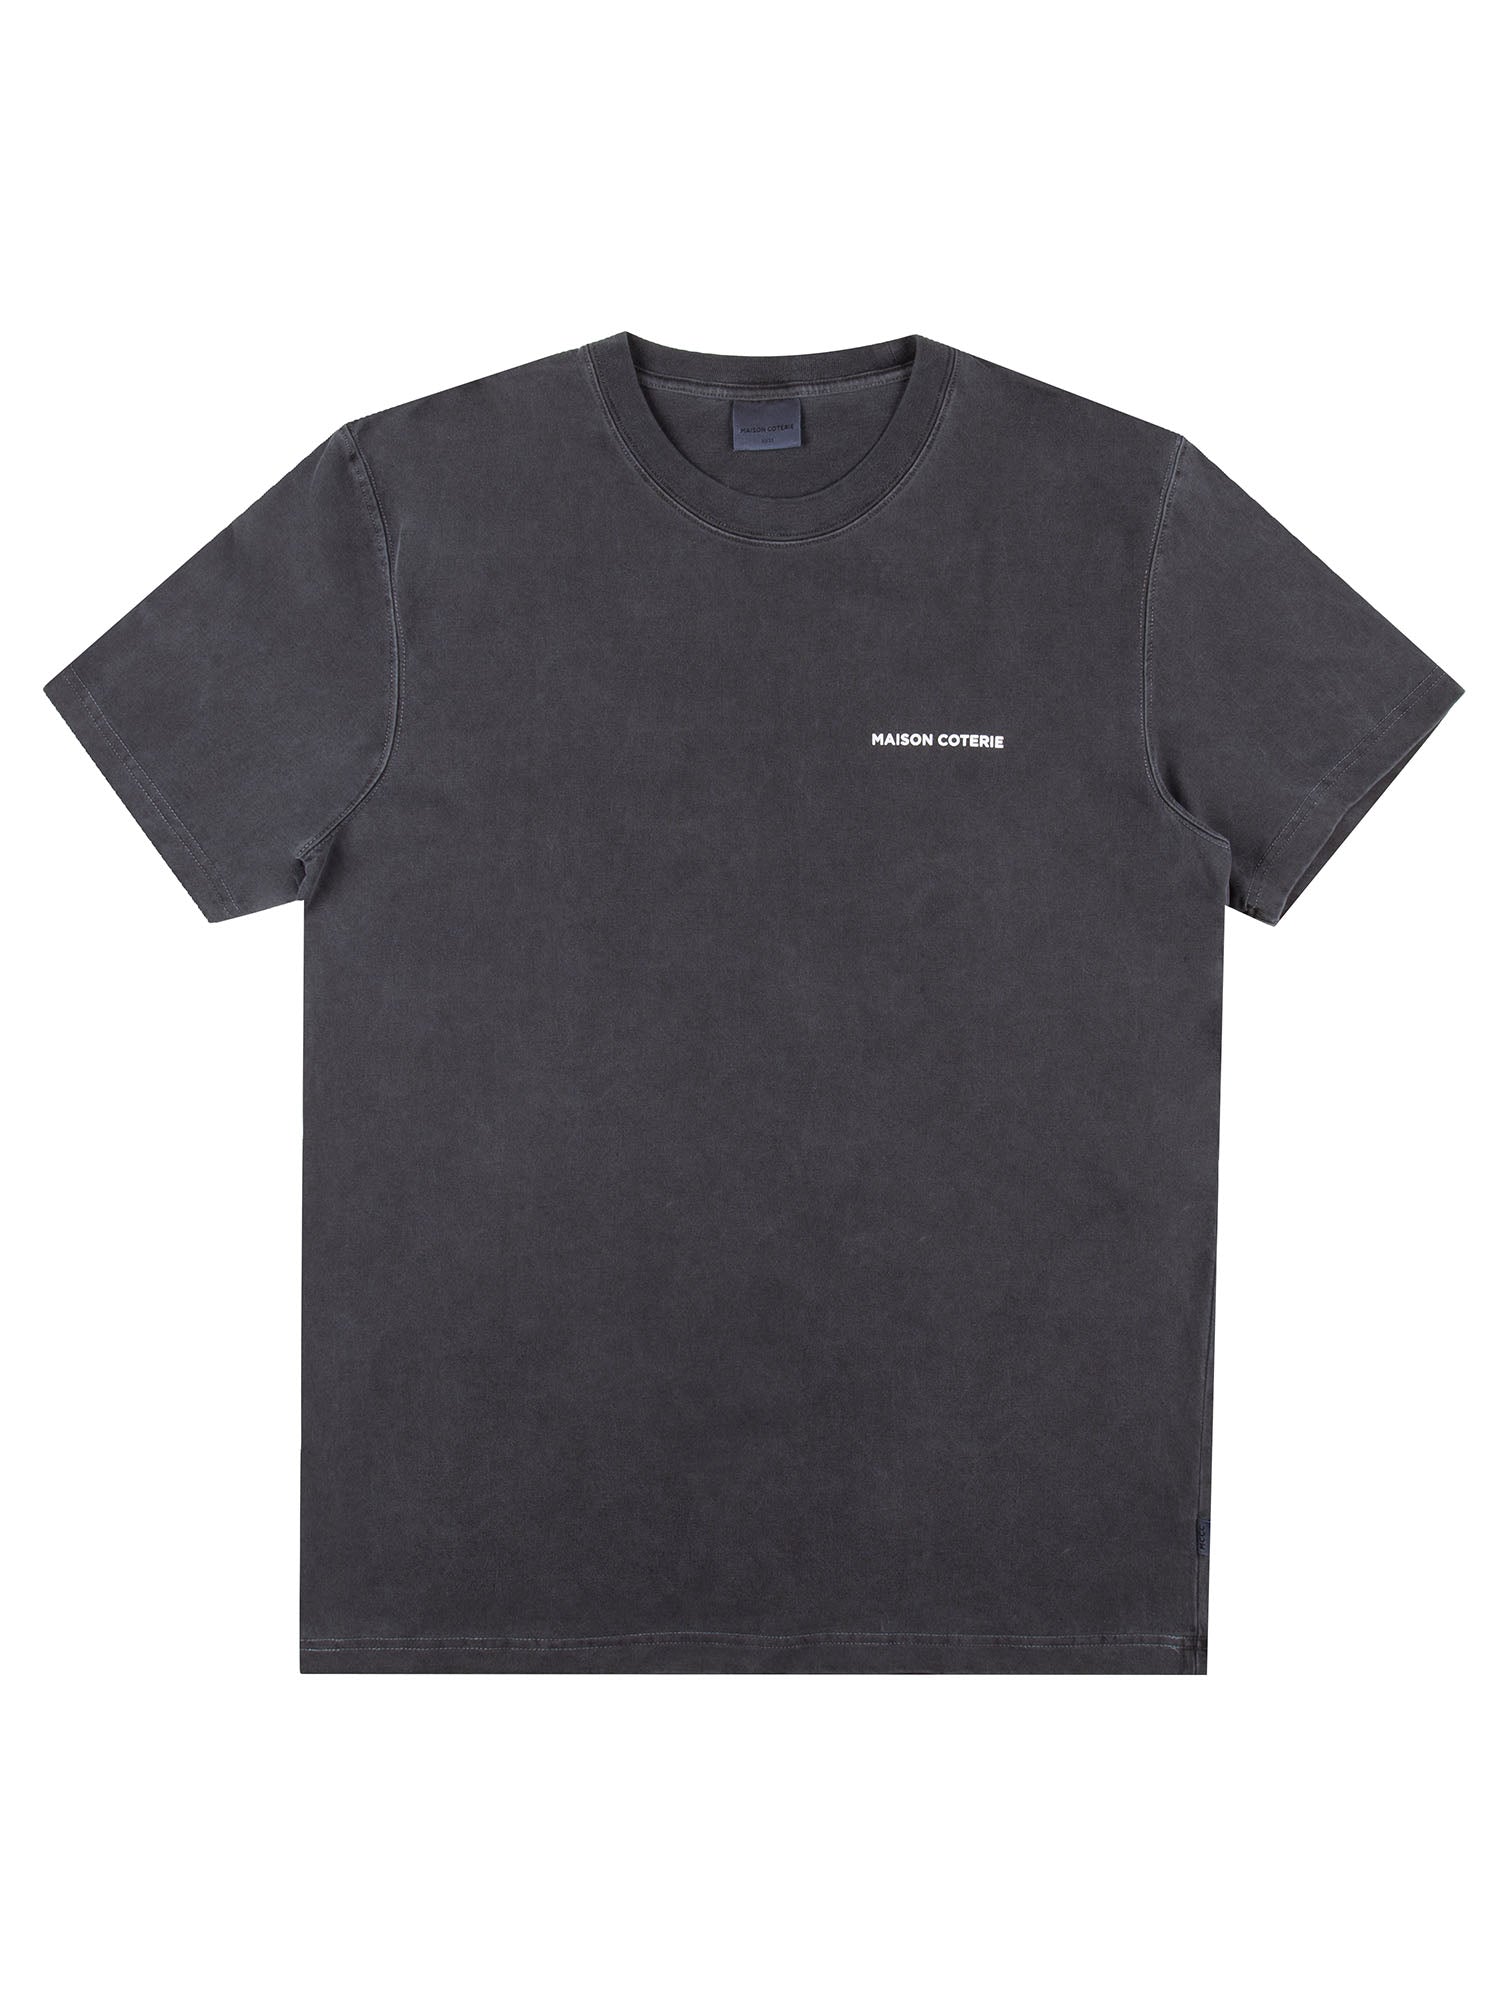 Avery - Pigment Dye T-Shirt - Black